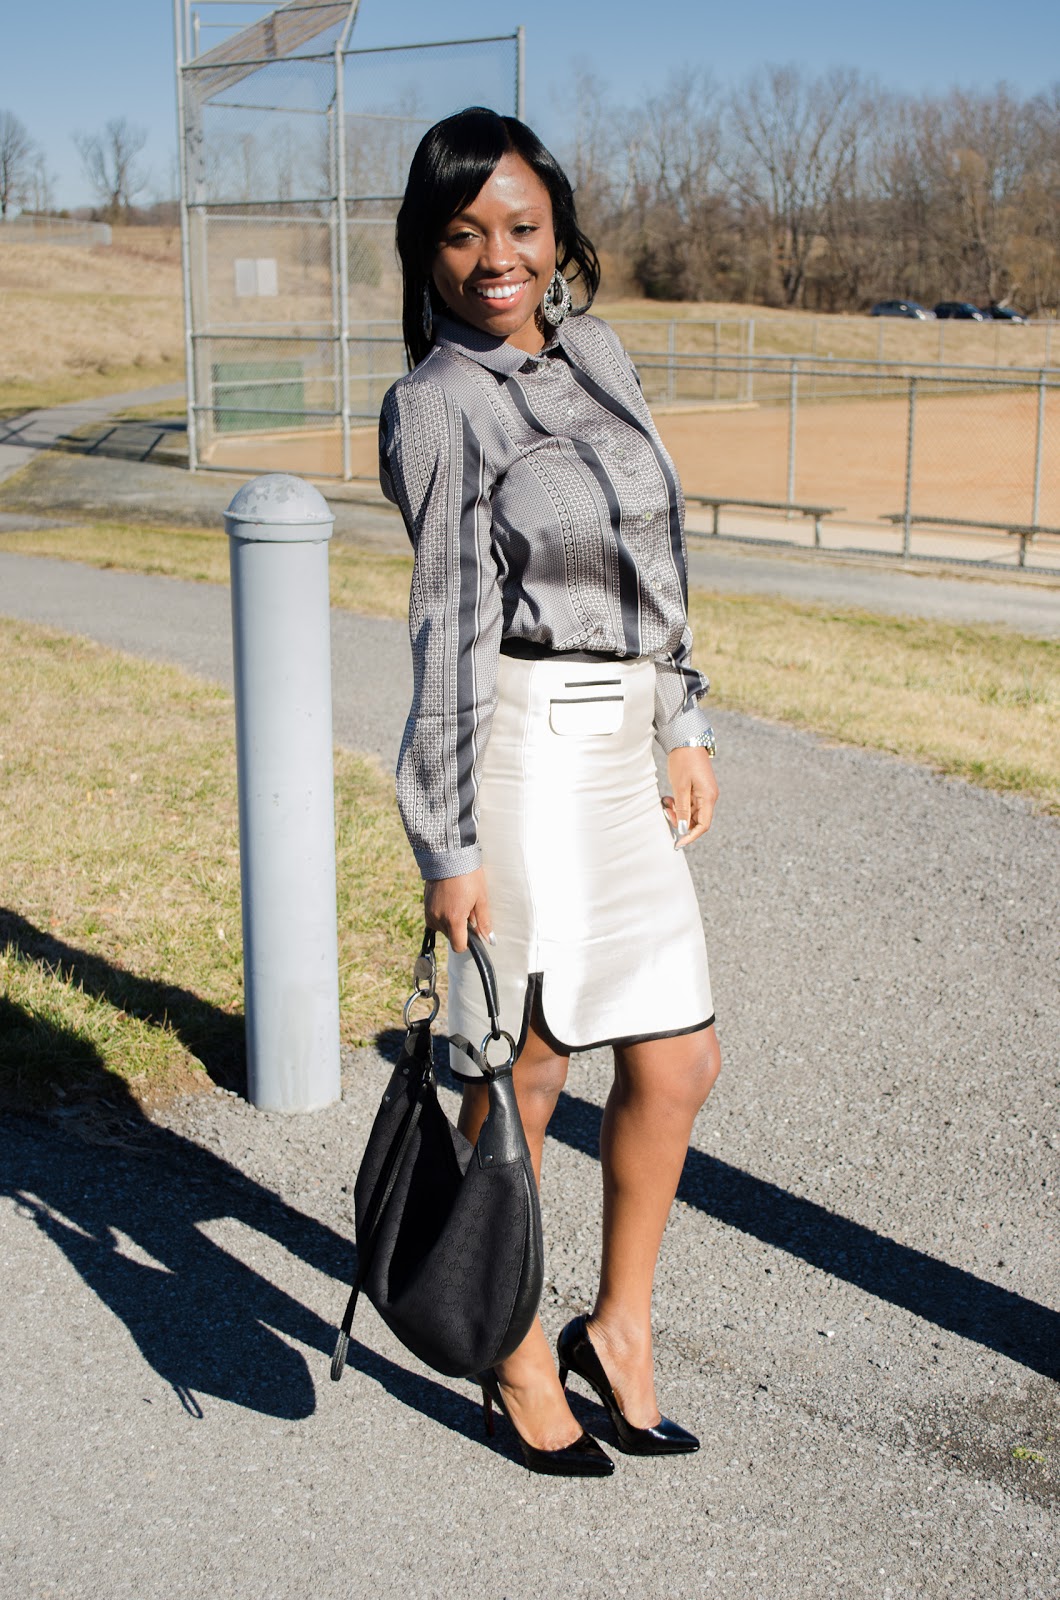 Corporate Style: Tuxedo Skirt + Scarf Print Blouse | Prissysavvy